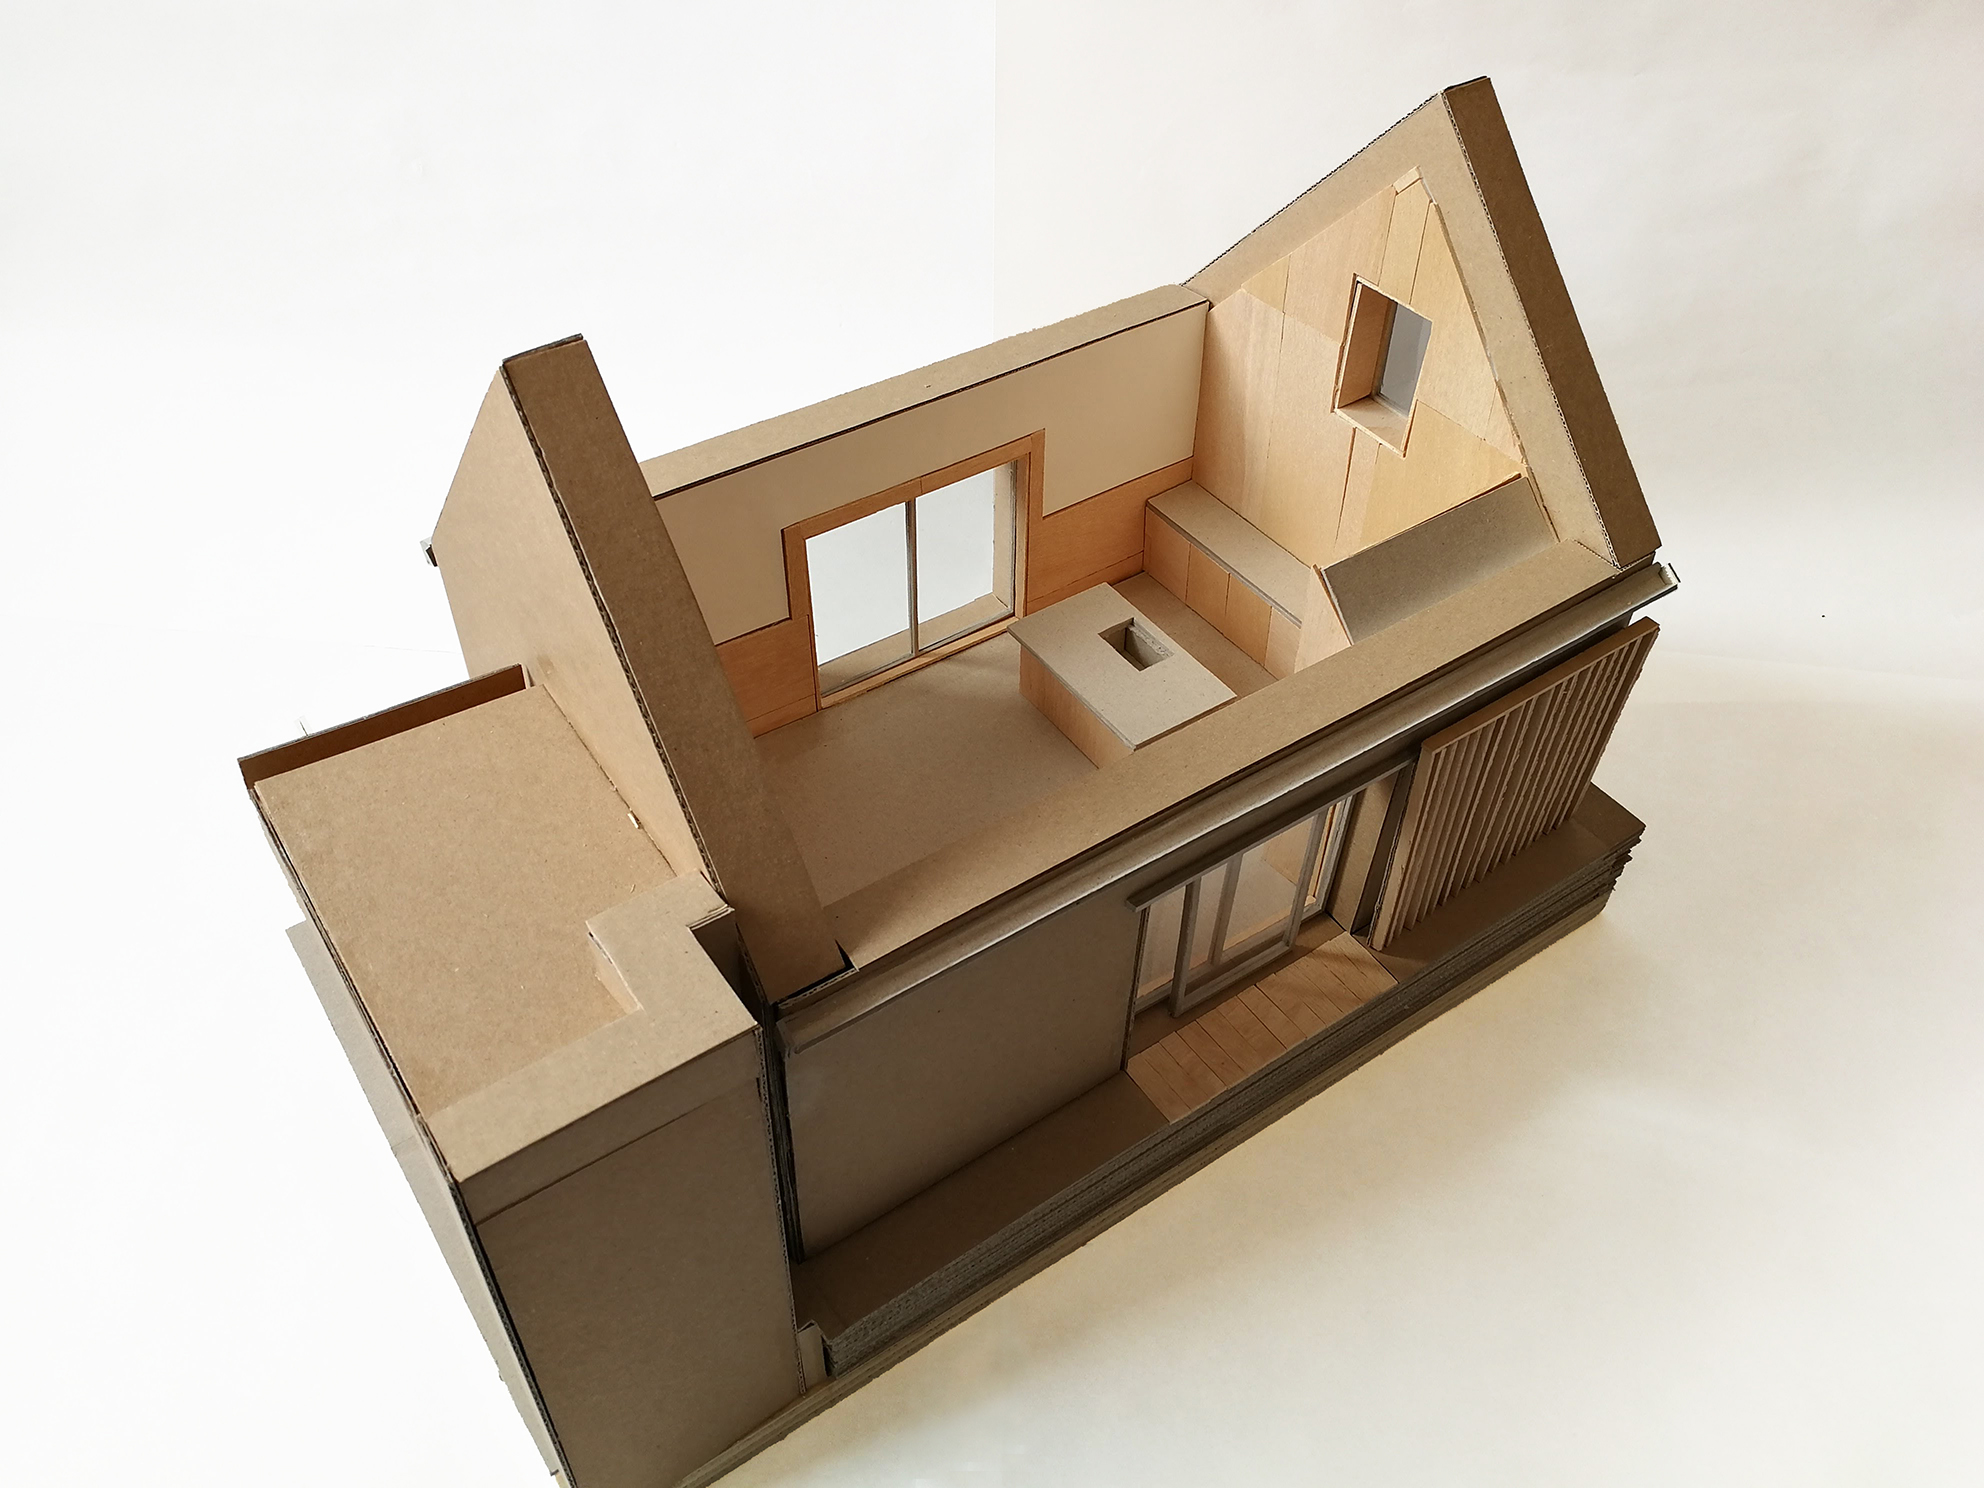 harper-perry-architects-barn-conversion-model-development-internal-layout-open-kitchen-axo